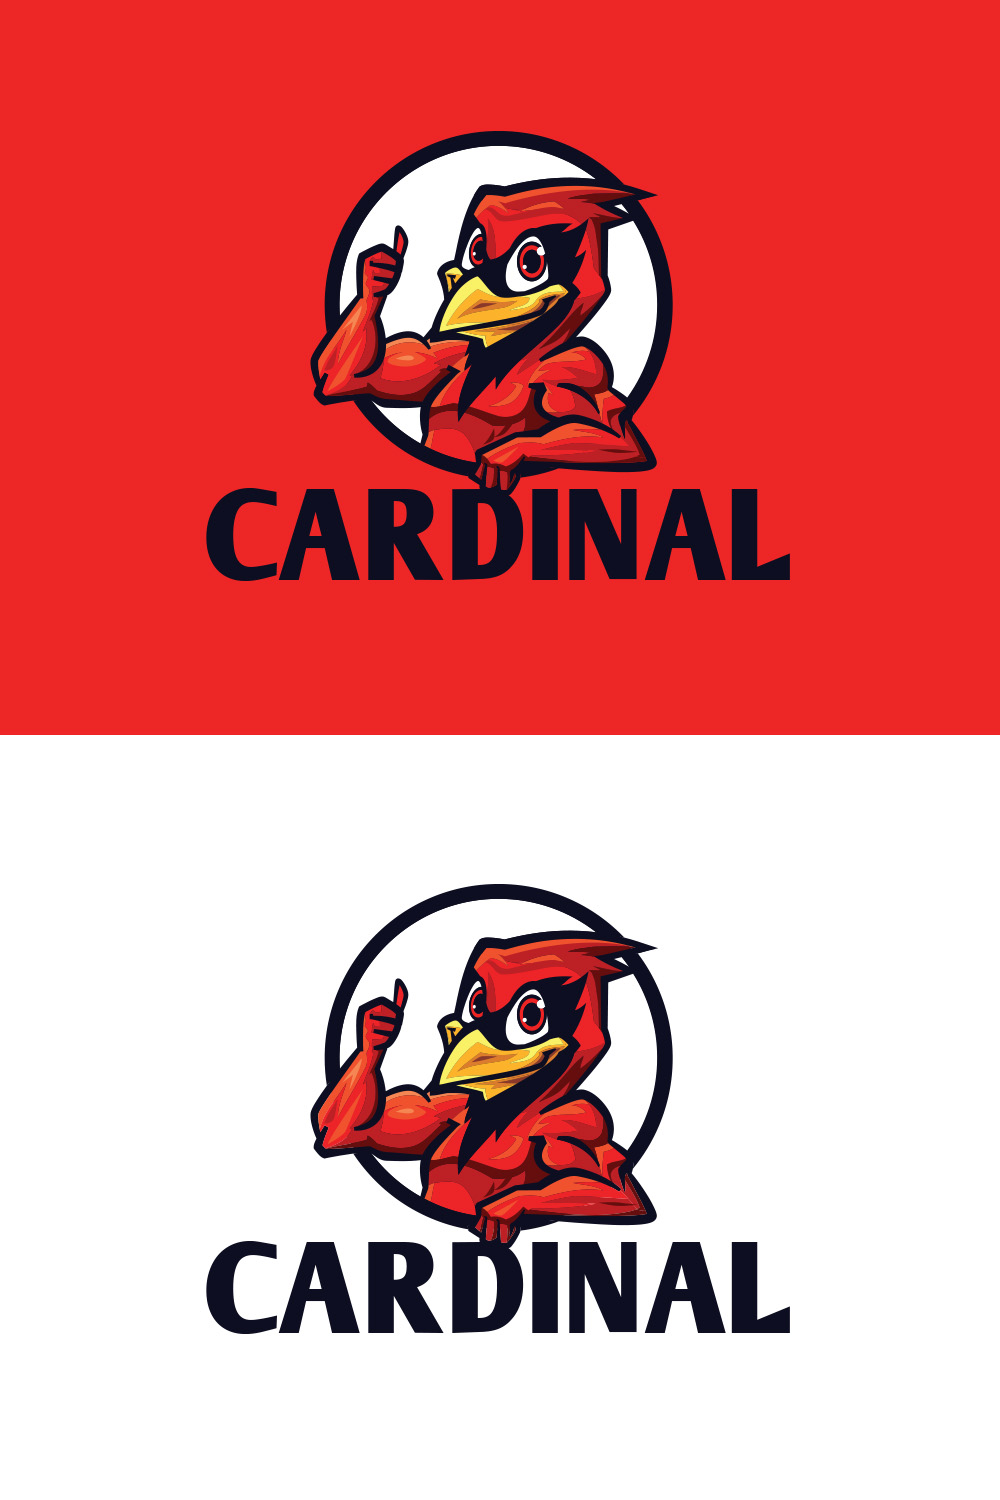 Cartoon Cardinal Charater Mascot Logo pinterest preview image.